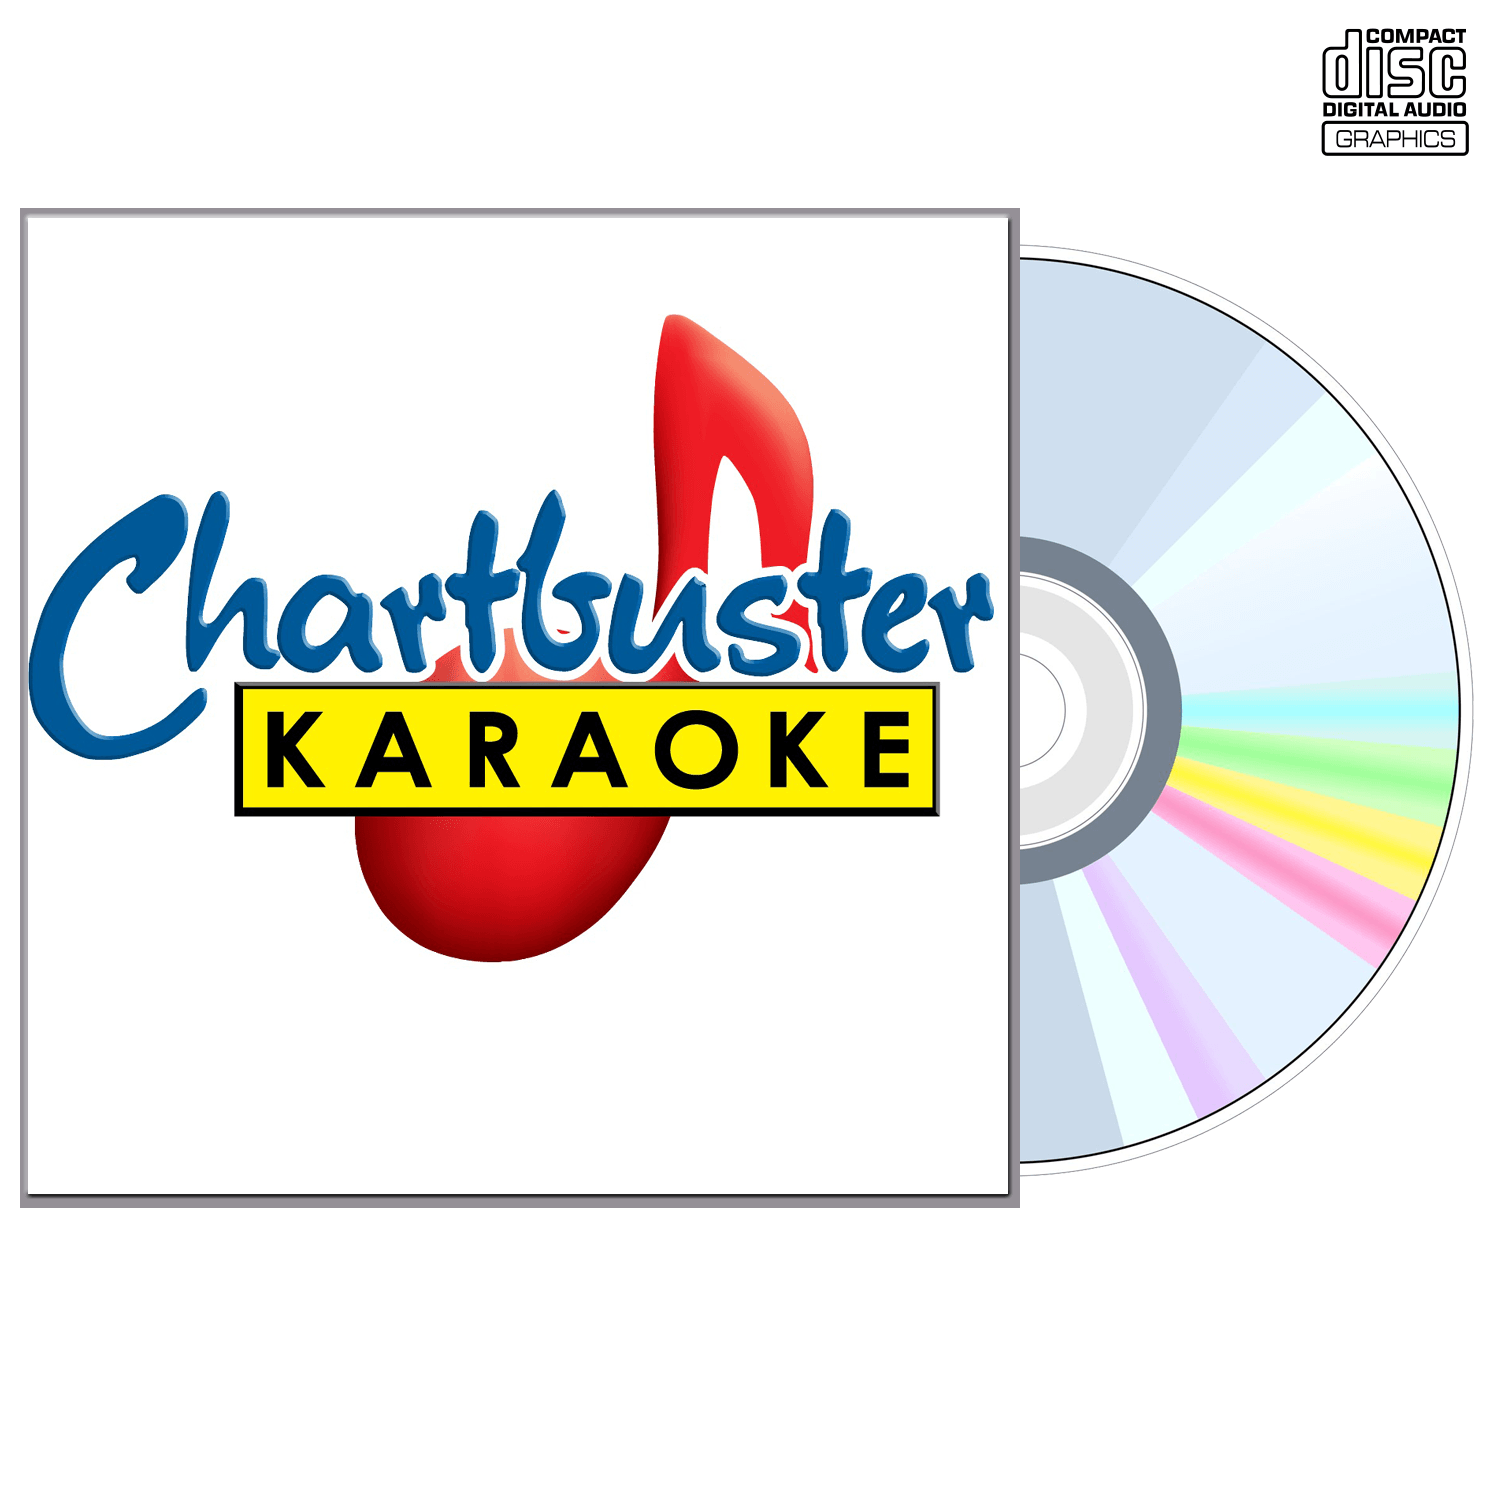 Rodney Atkins - CD+G - Chartbuster Karaoke - Karaoke Home Entertainment